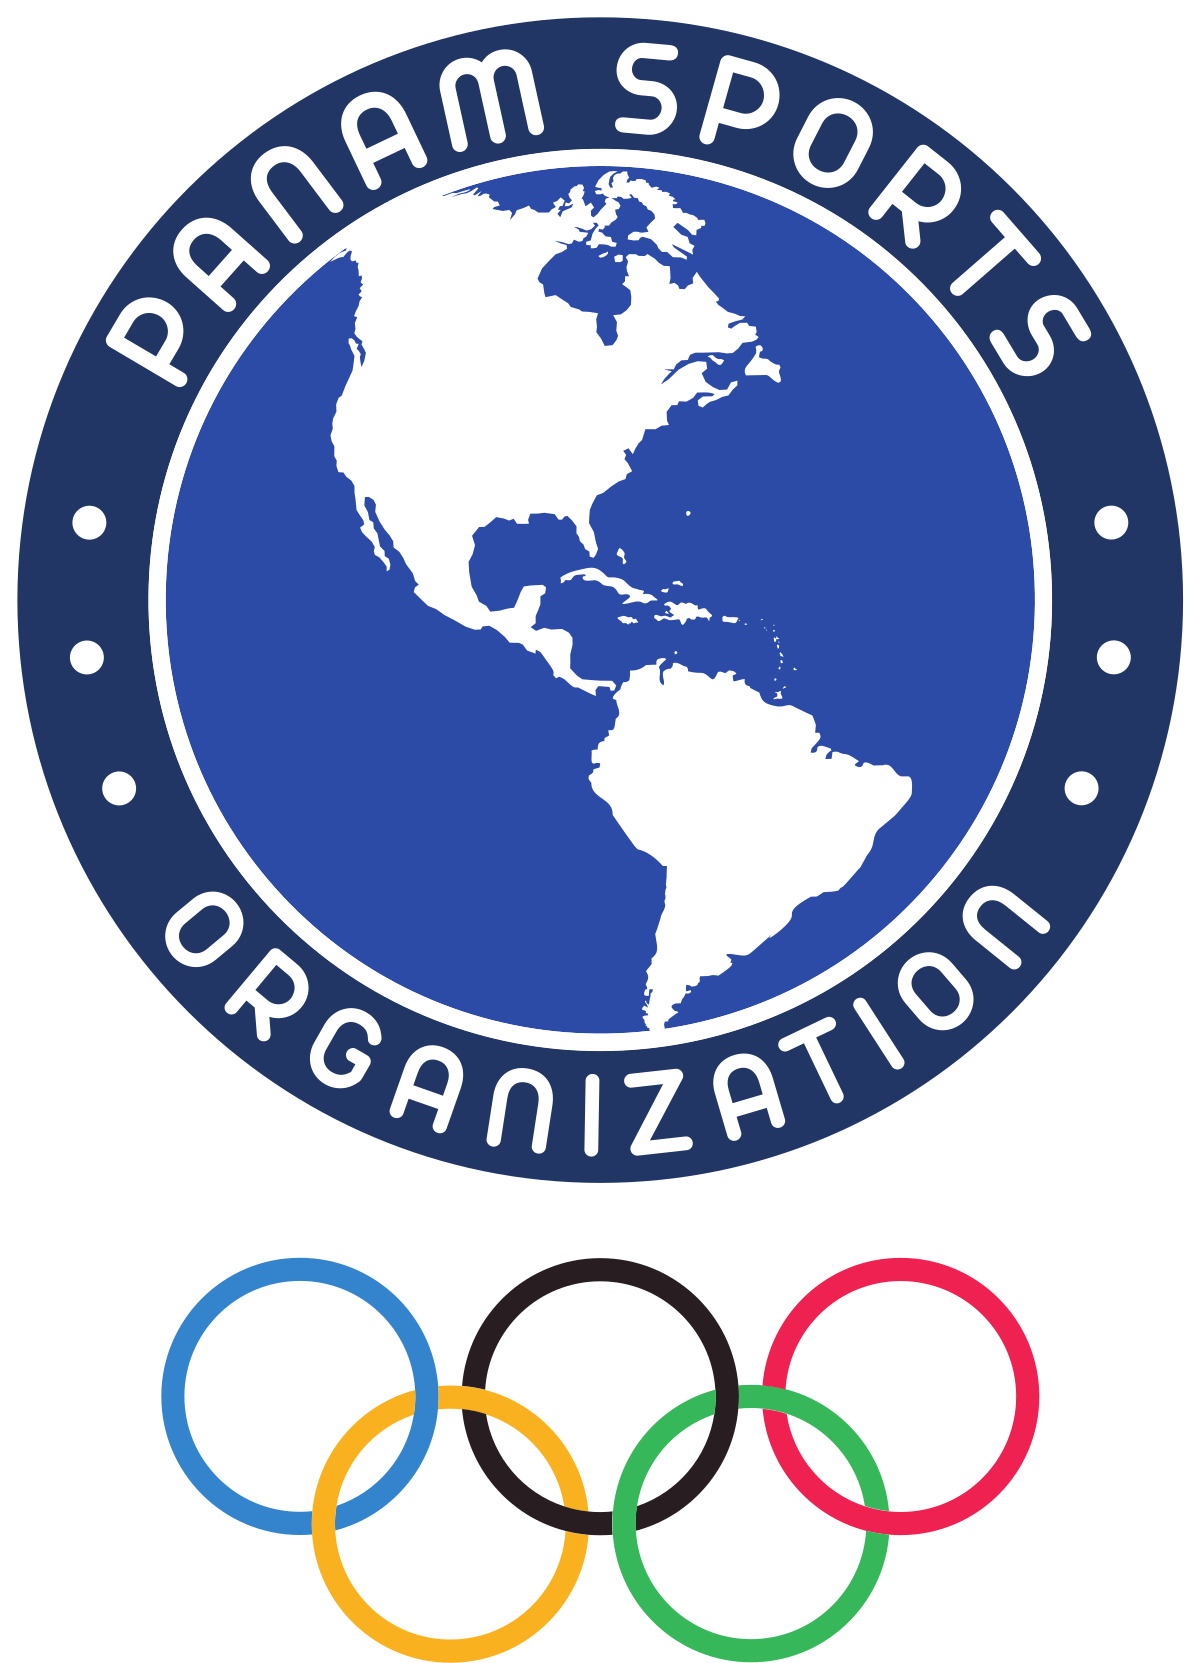 Peruvian Athletics Sport Federation - Wikipedia